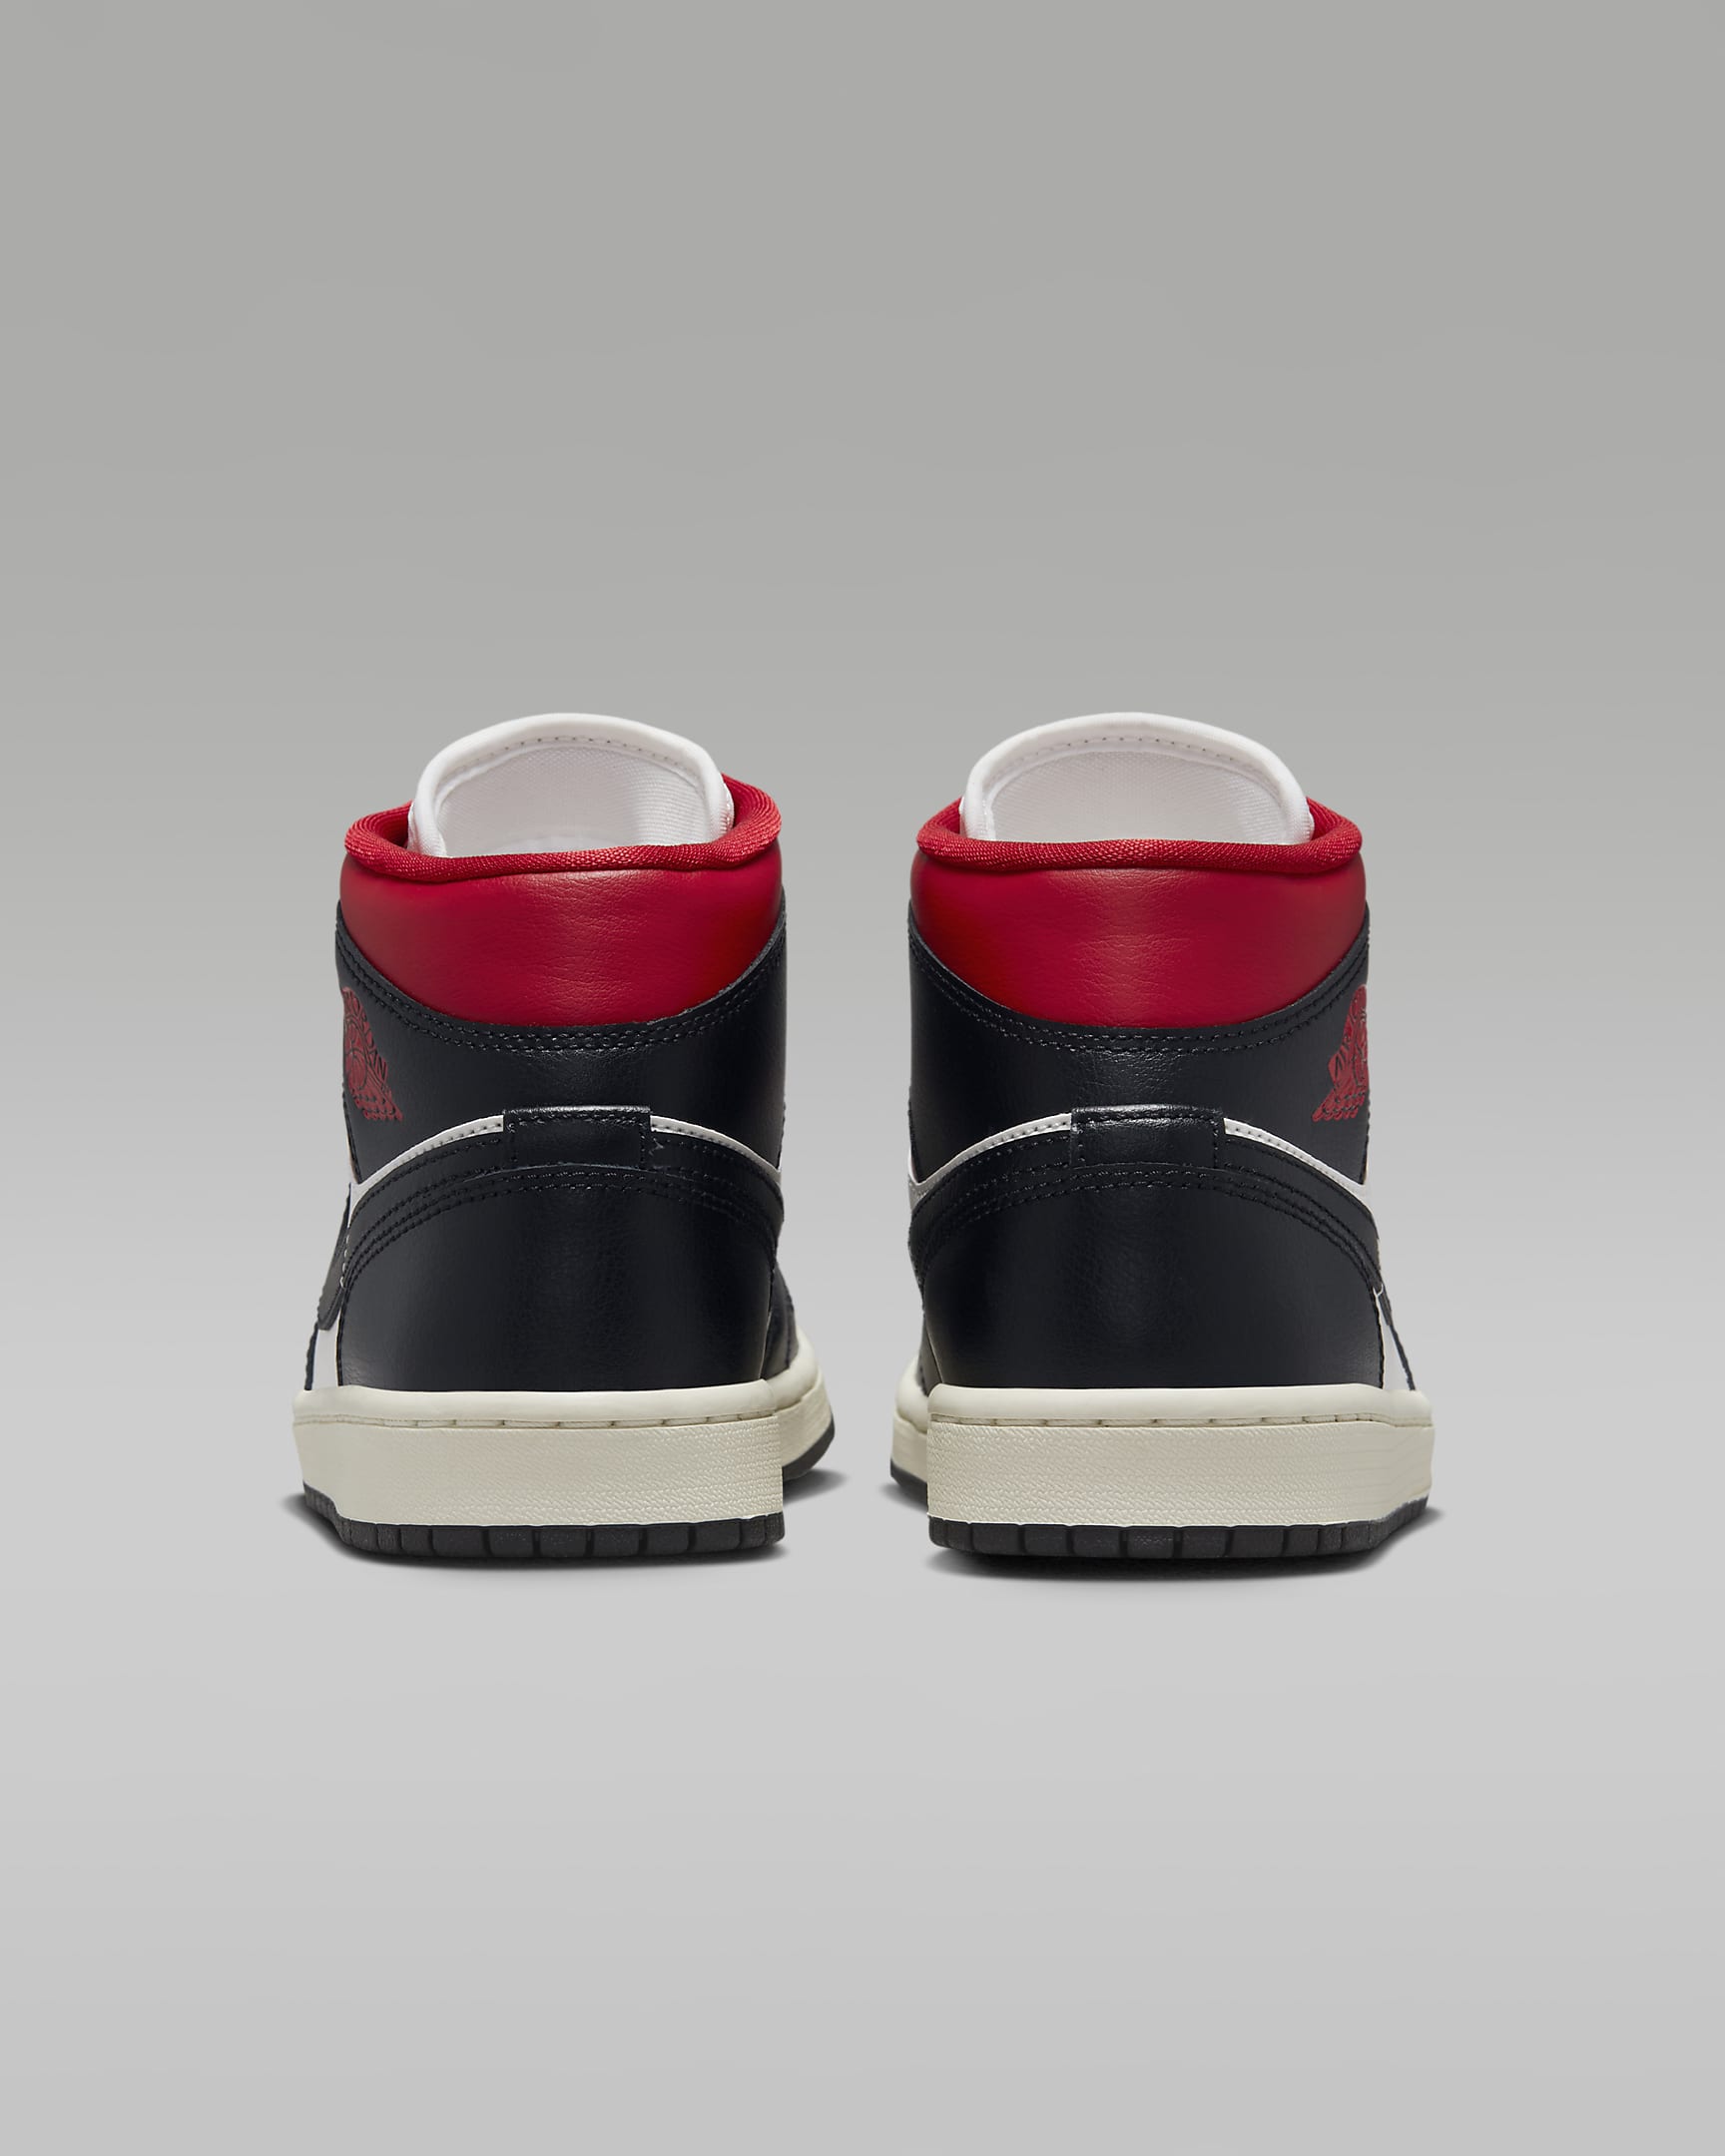 Air Jordan 1 Mid Women's Shoes - Black/Sail/Gym Red